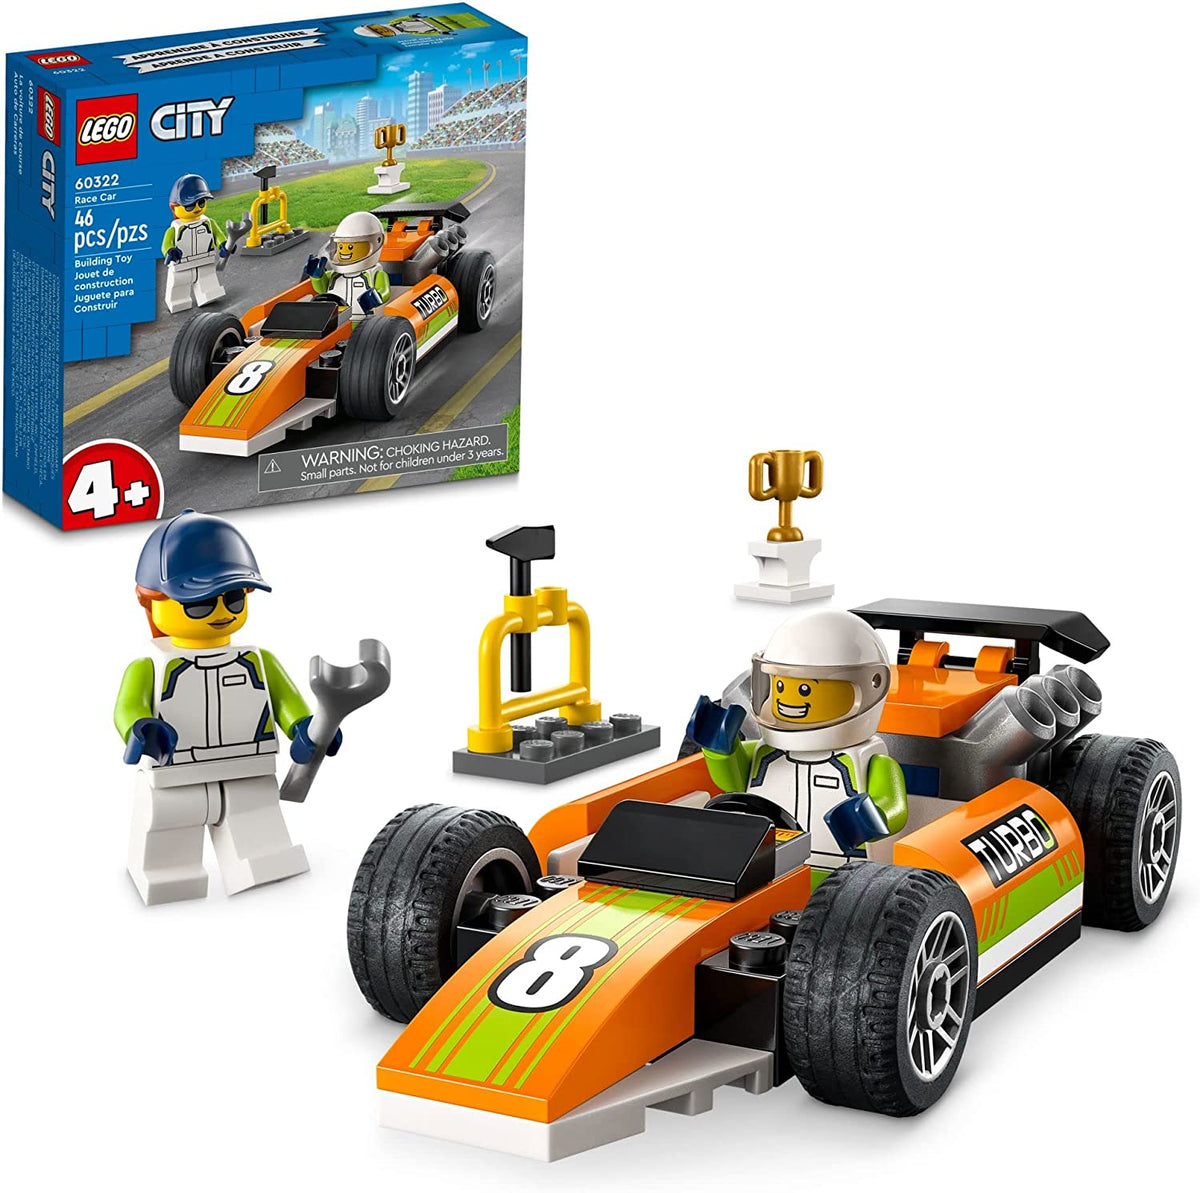 CITY 60322: Race Car